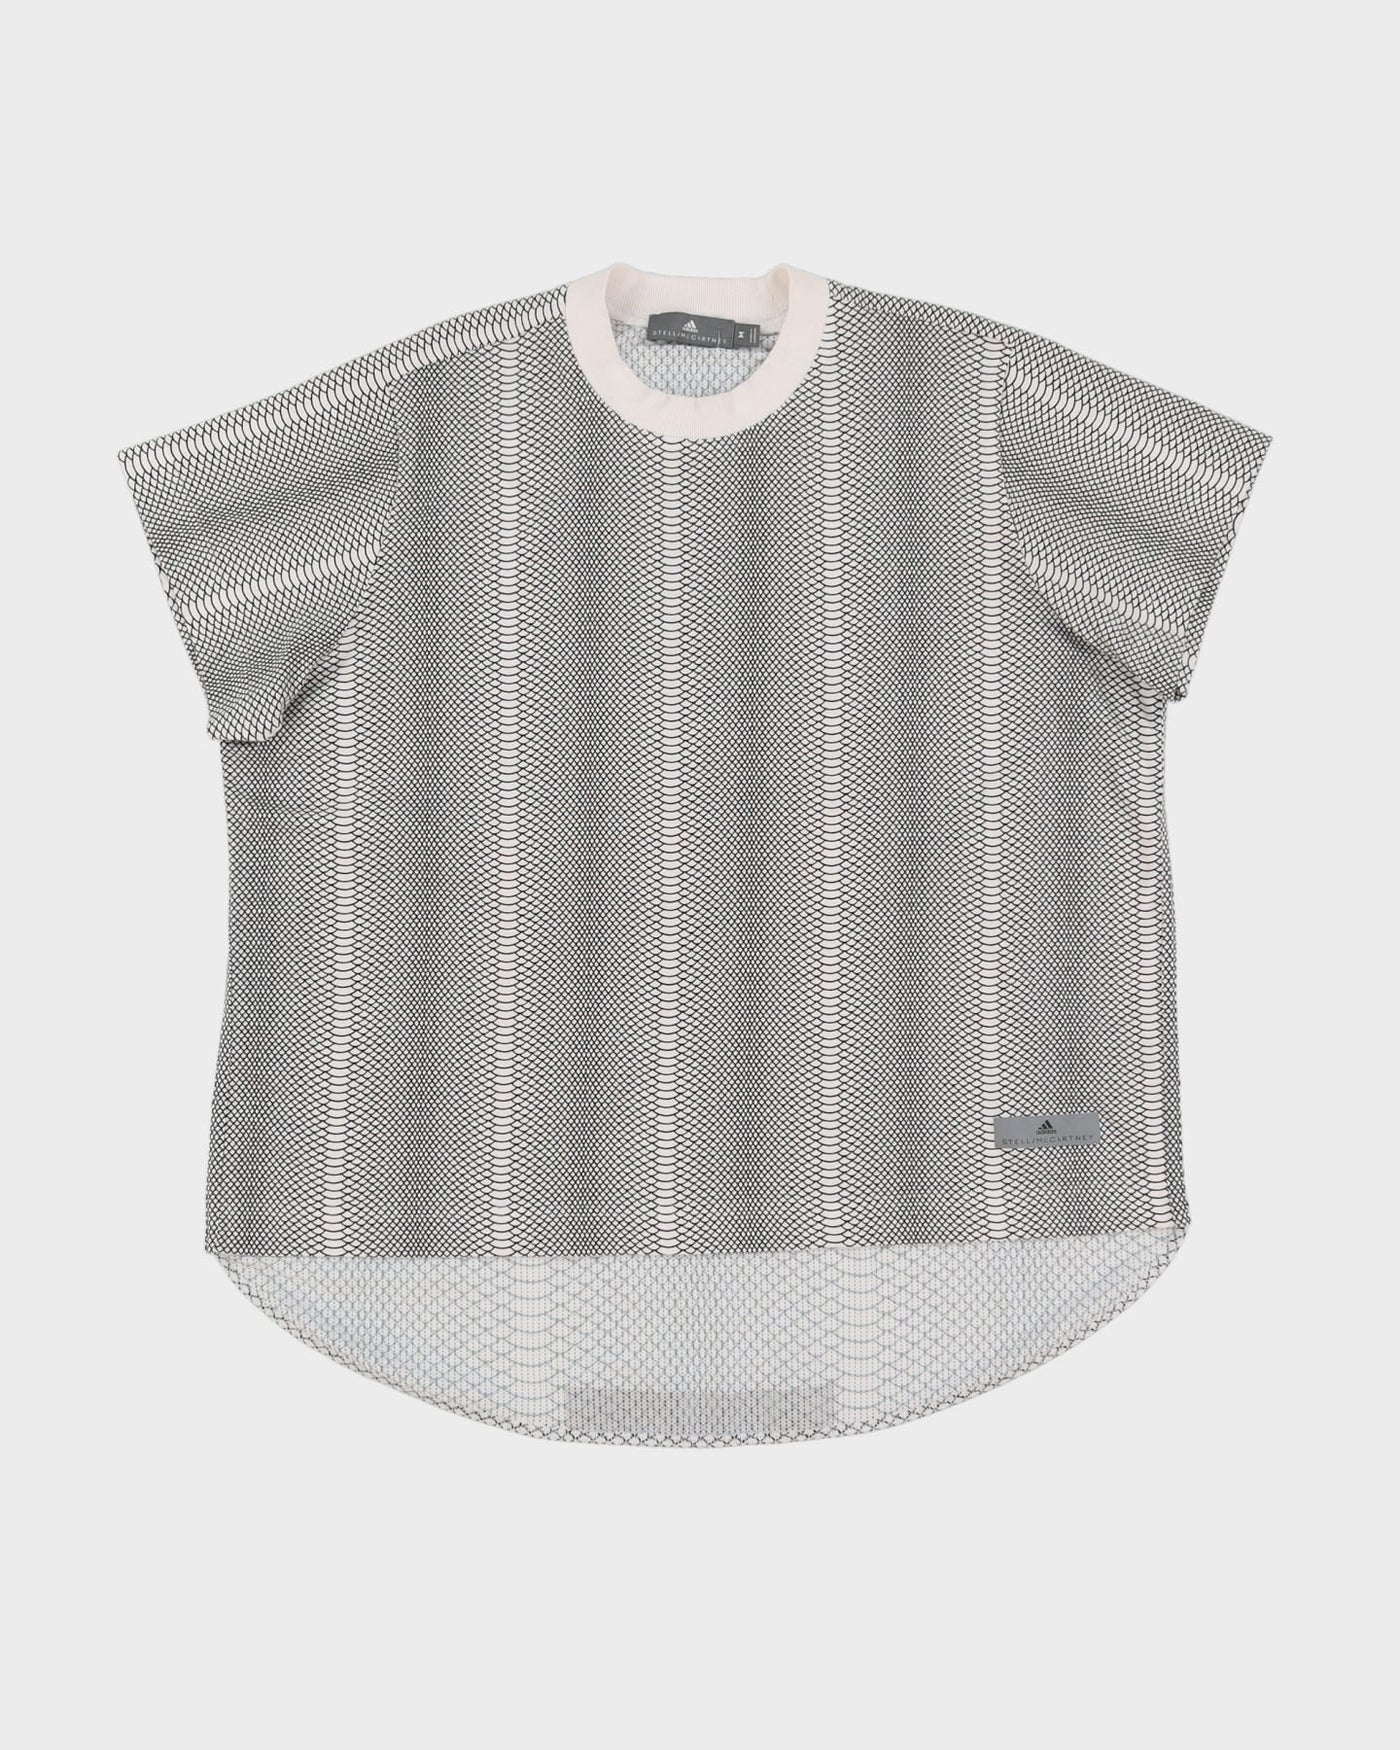 Stella McCartney For Adidas T-Shirt - M